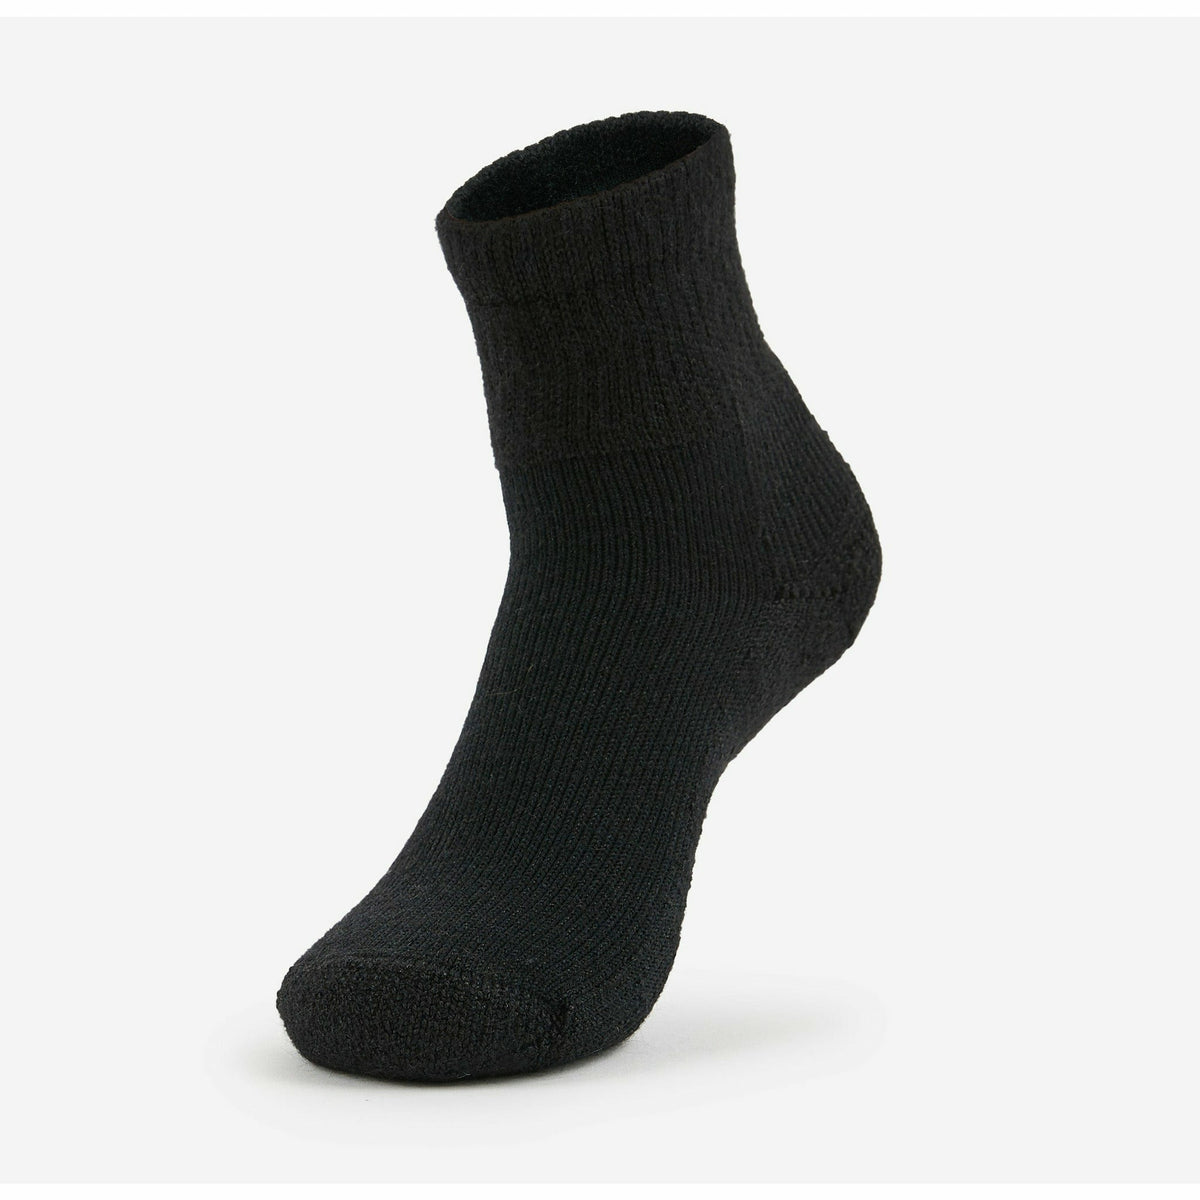 Thorlo Uniform Moderate Cushion Ankle Socks - GoBros.com